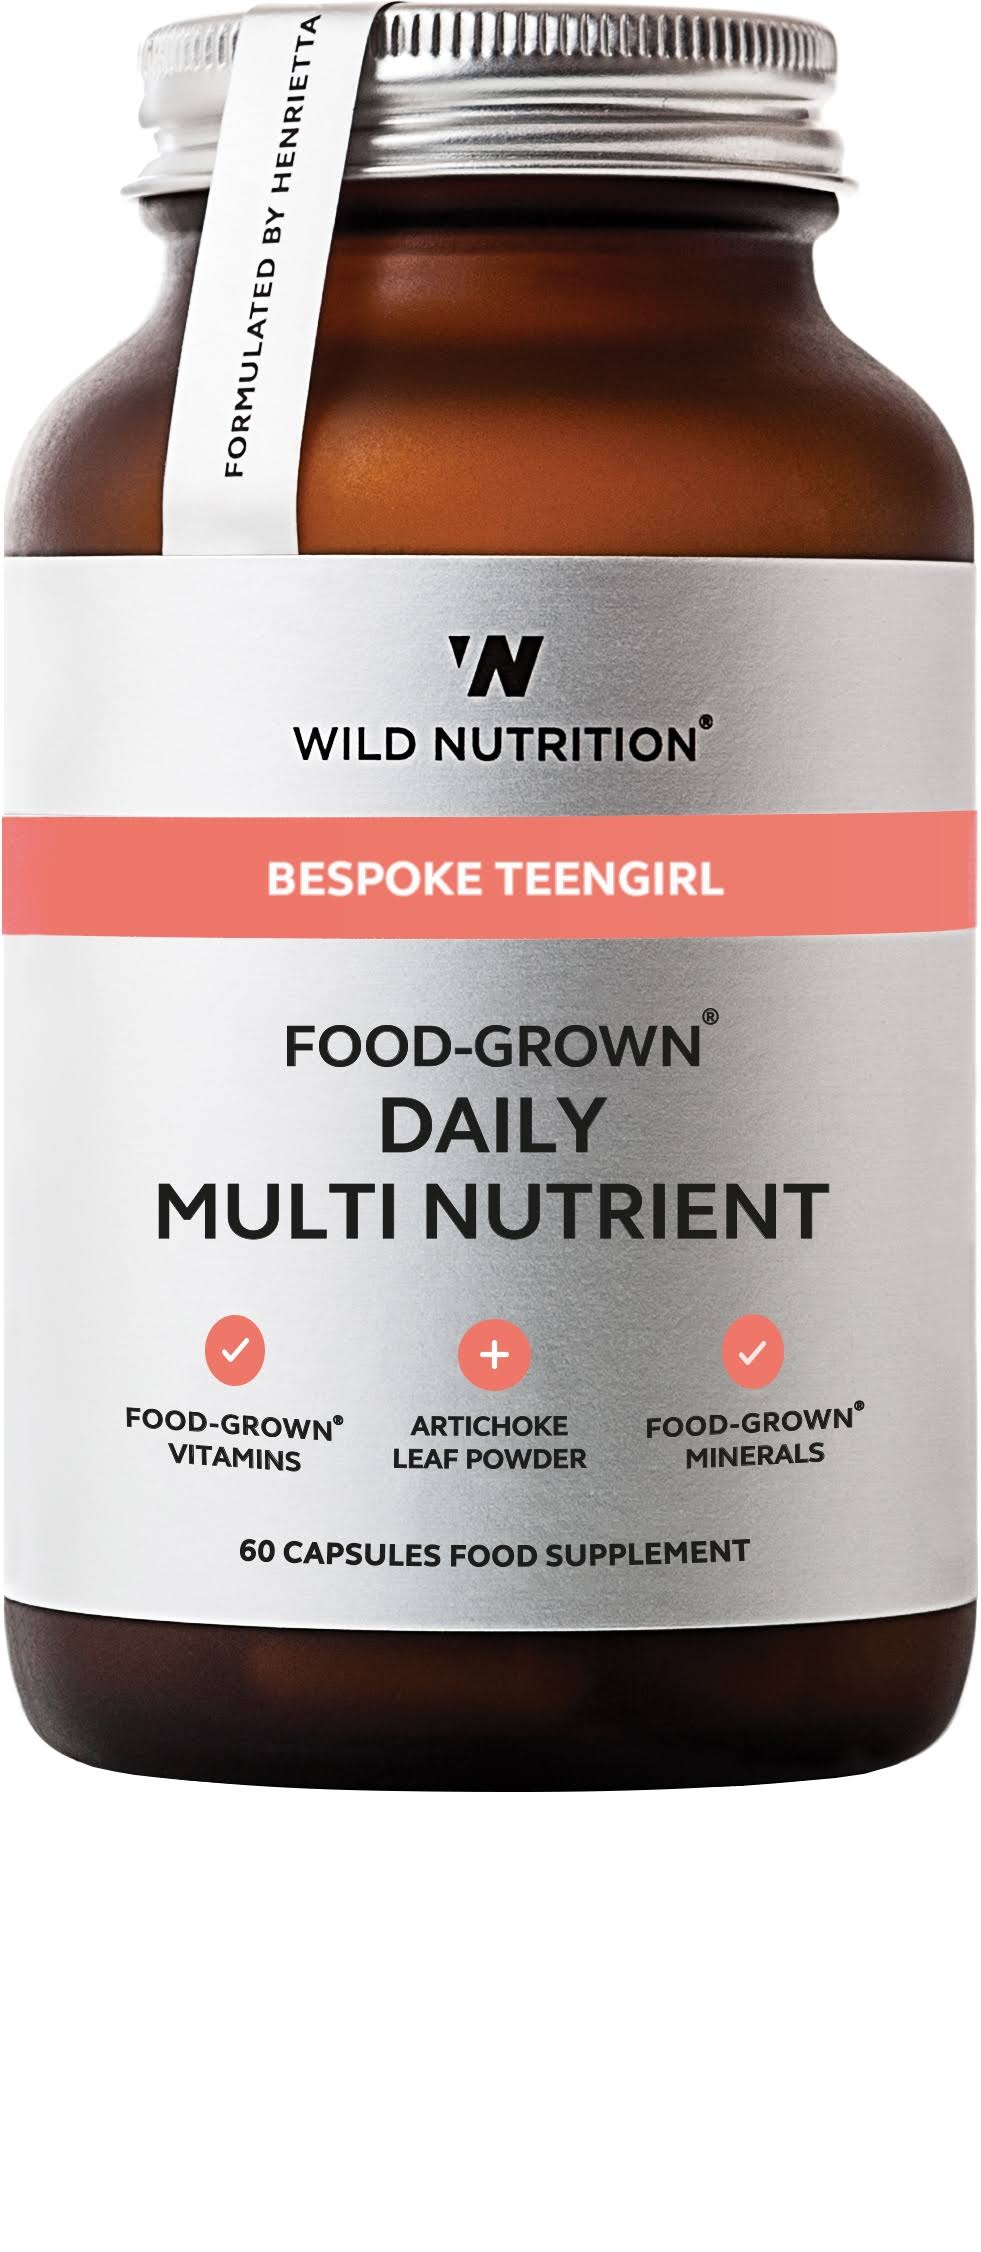 Wild Nutrition Bespoke Teen Girl Food-Grown Daily Multi Nutrient